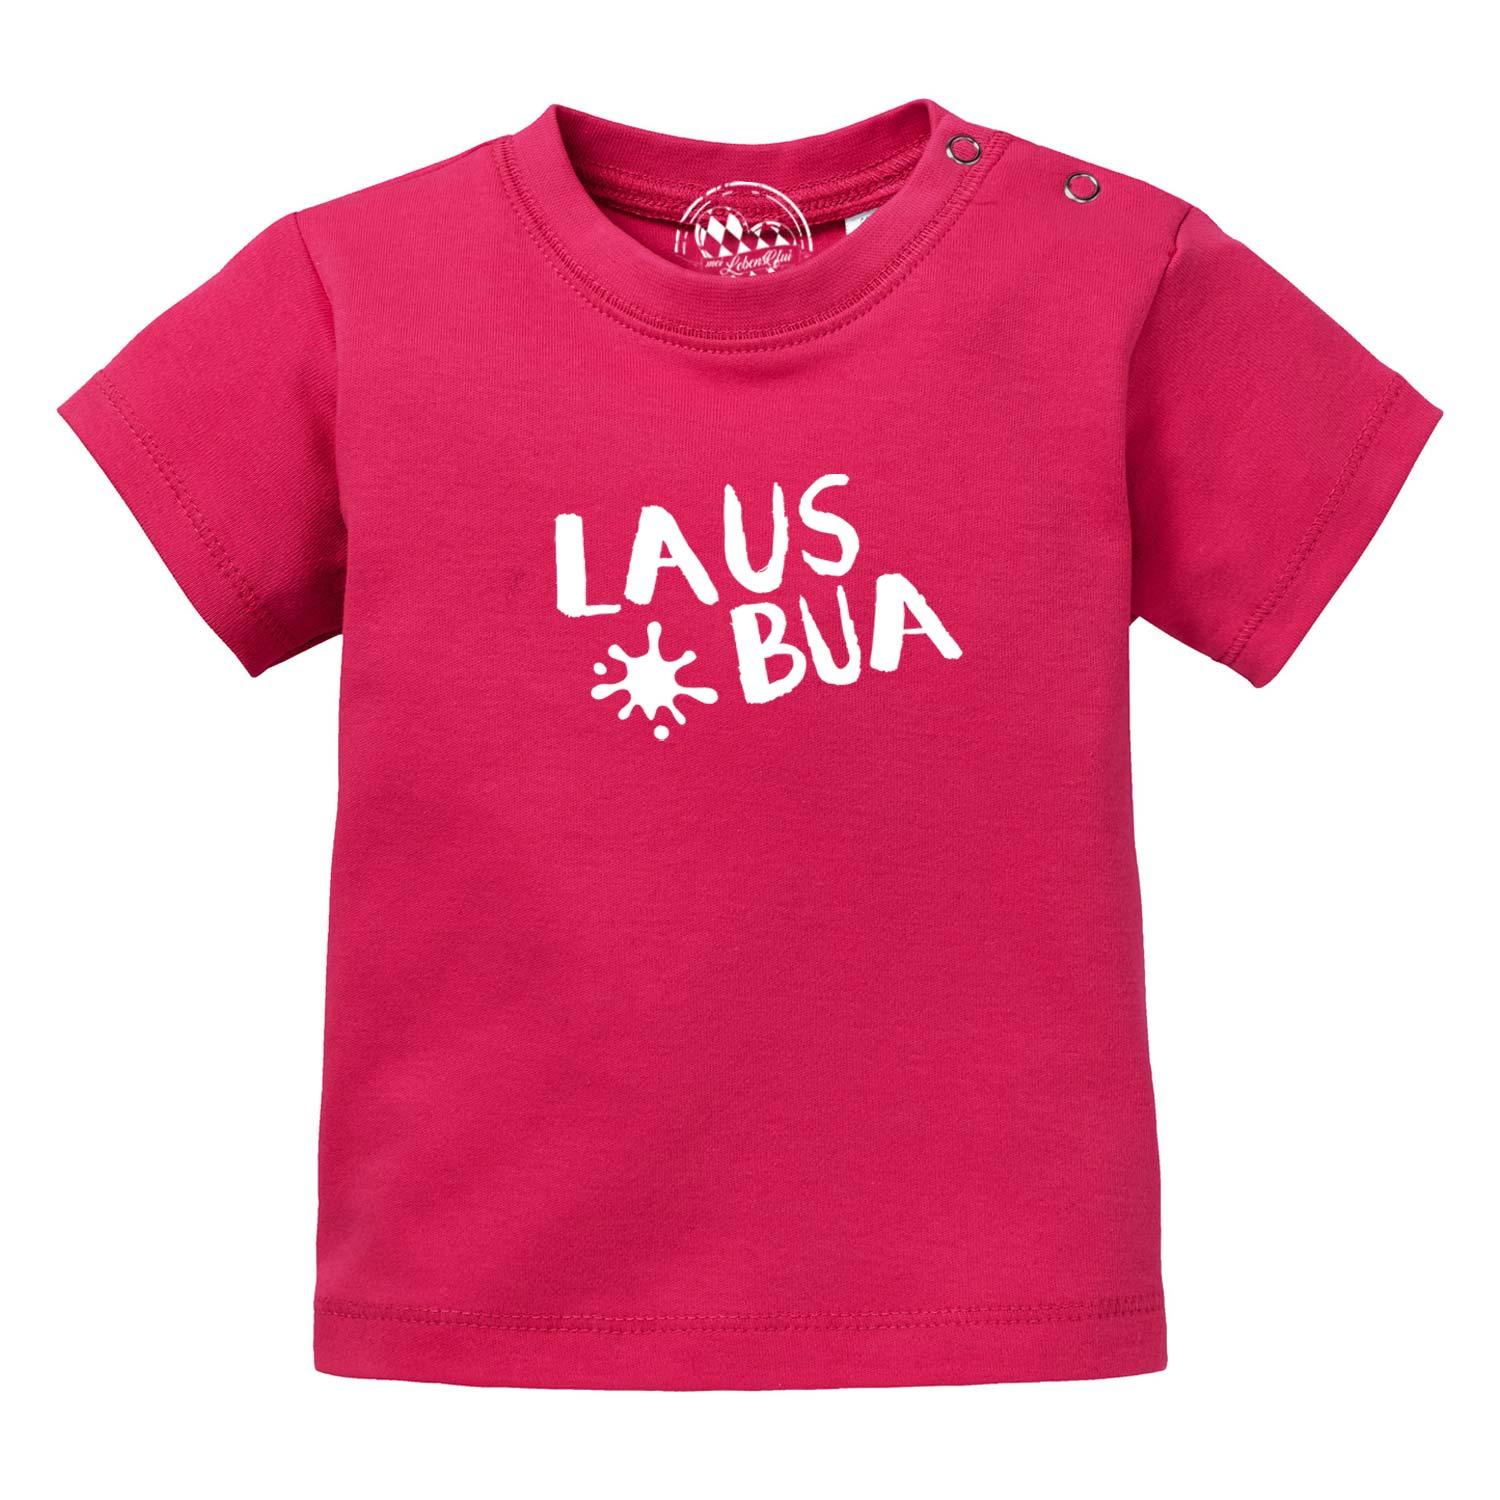 Baby T-Shirt "Lausbua" - bavariashop - mei LebensGfui